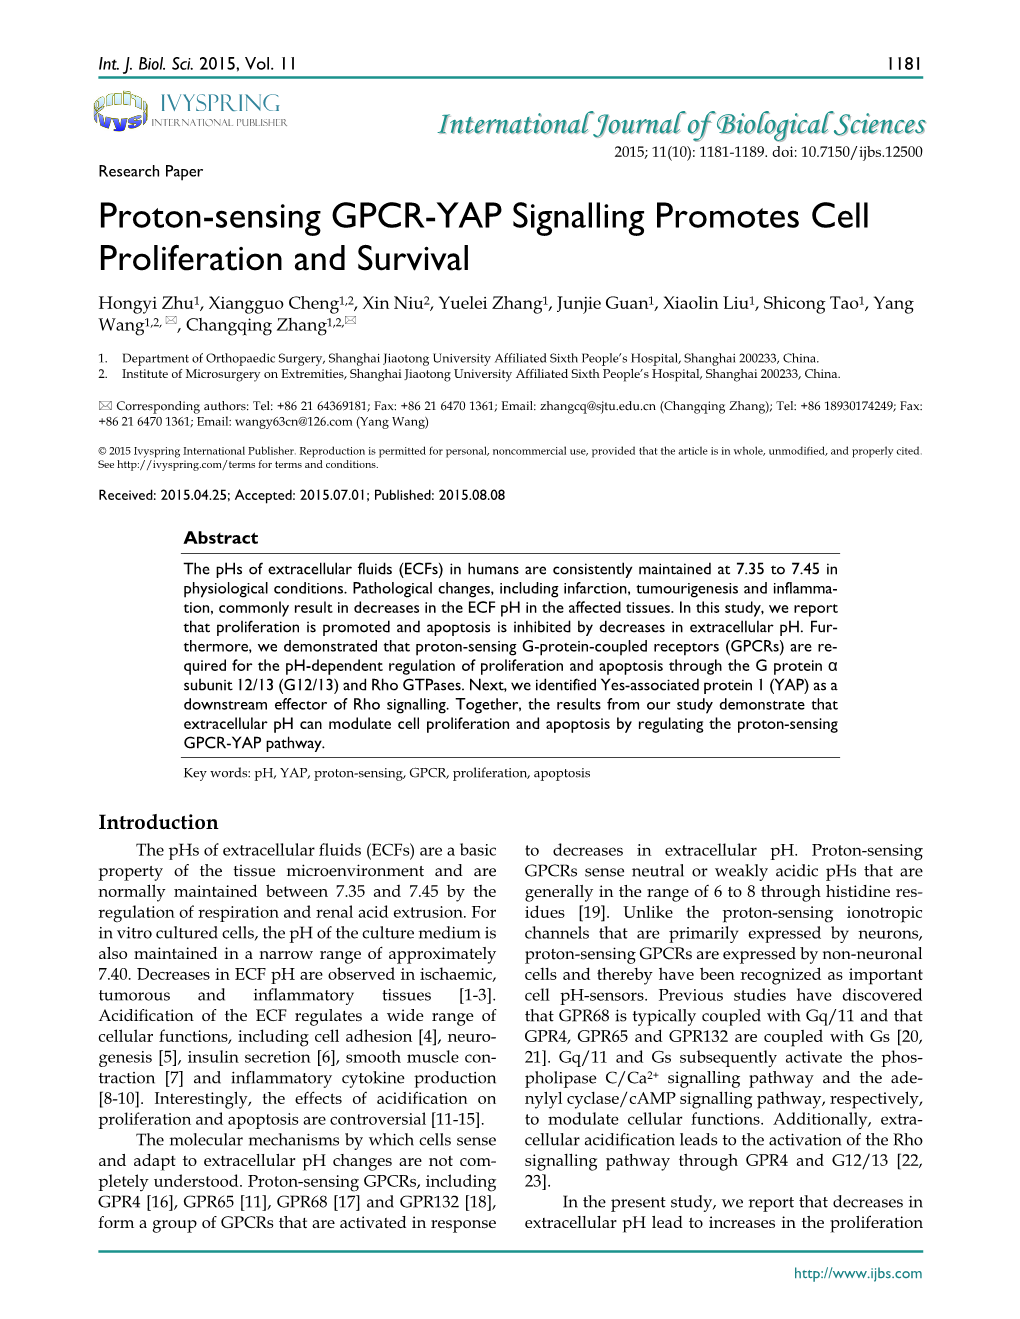 Proton-Sensing GPCR-YAP Signalling Promotes Cell Proliferation And